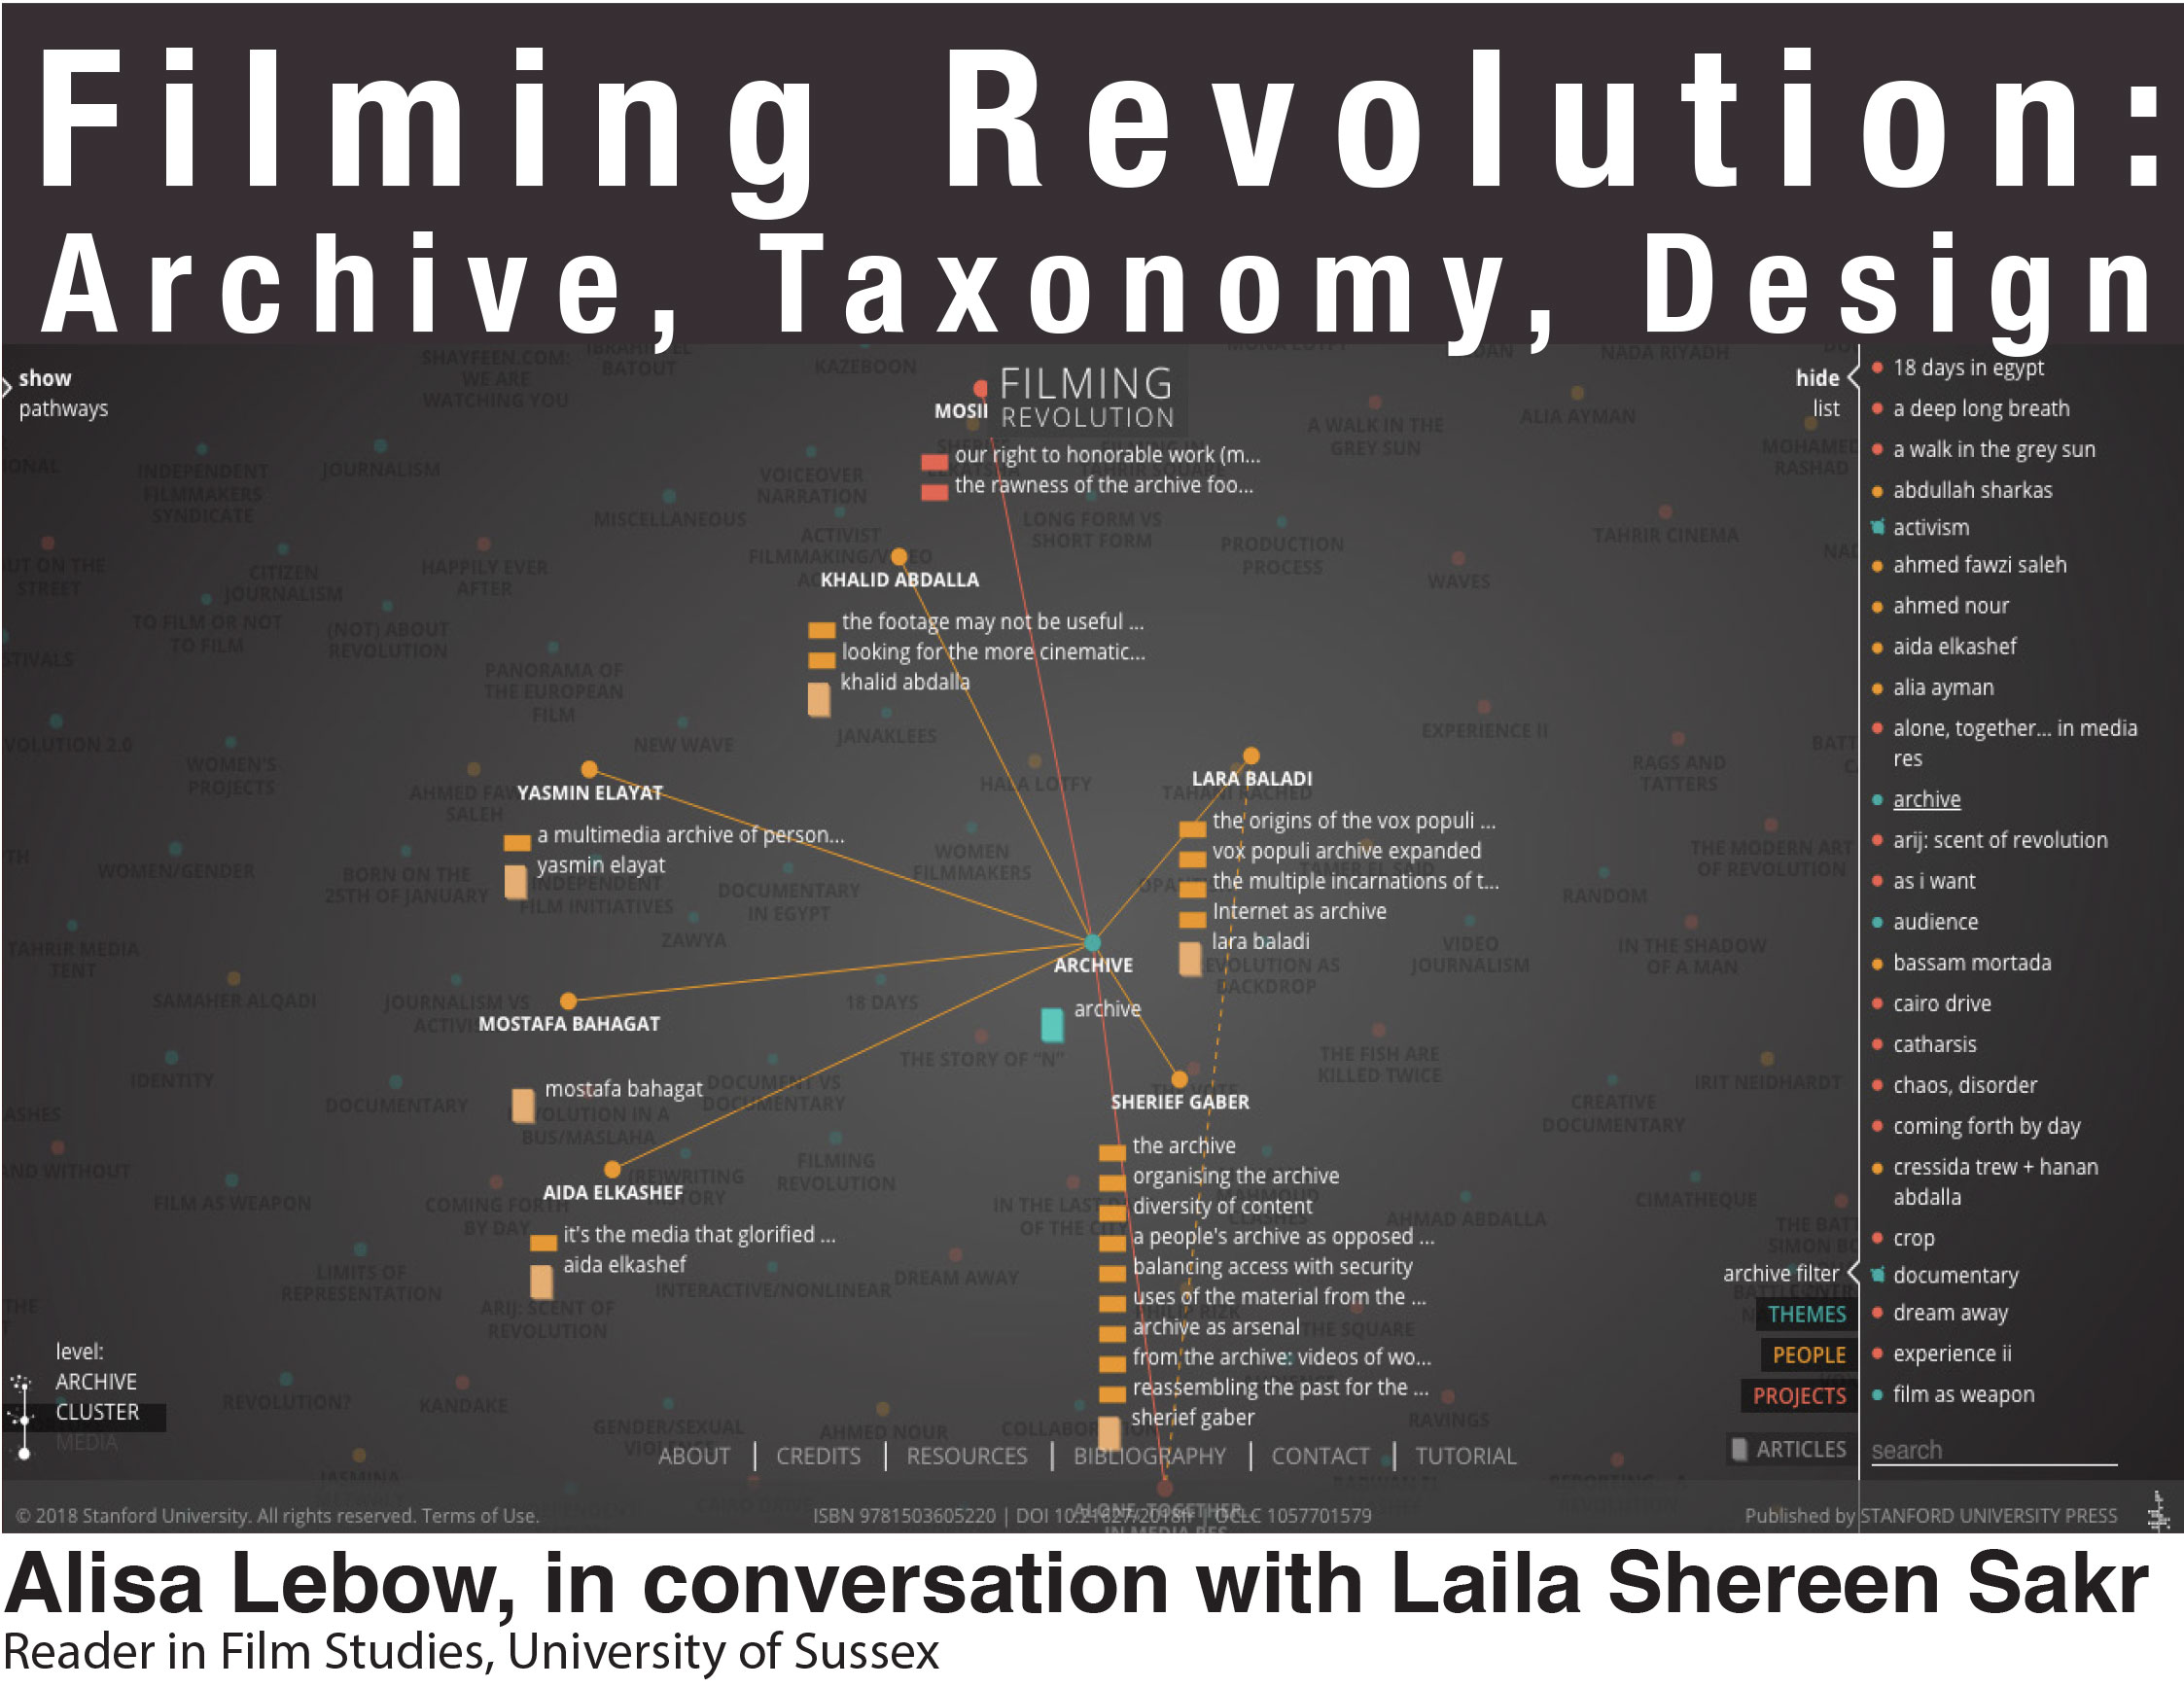 Filming Revolution: Archive, Taxonomy, Design